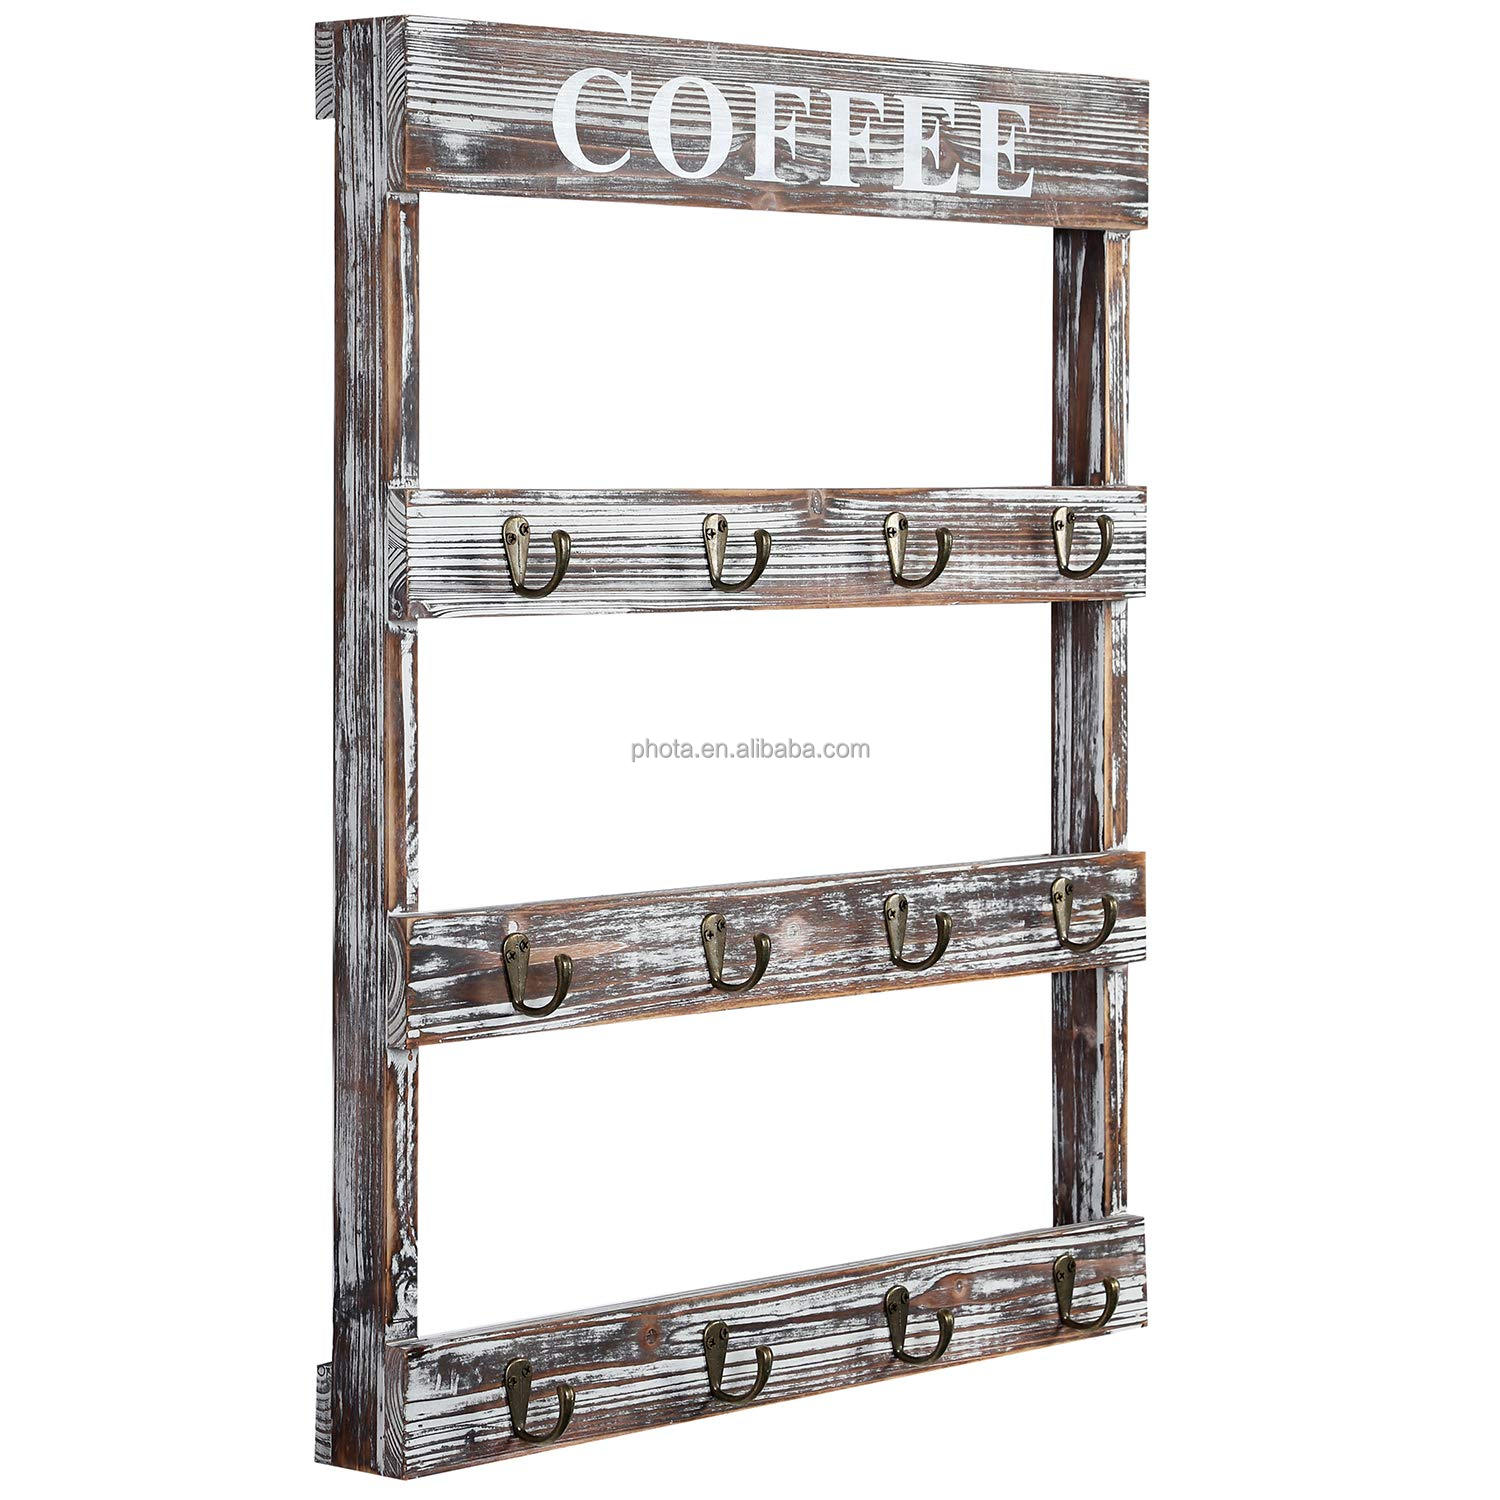 PHOTA Rustic Wood Wall-Mounted Cup Organizer Display Storage Rack Coffee Mug Holder with 12 Hooks